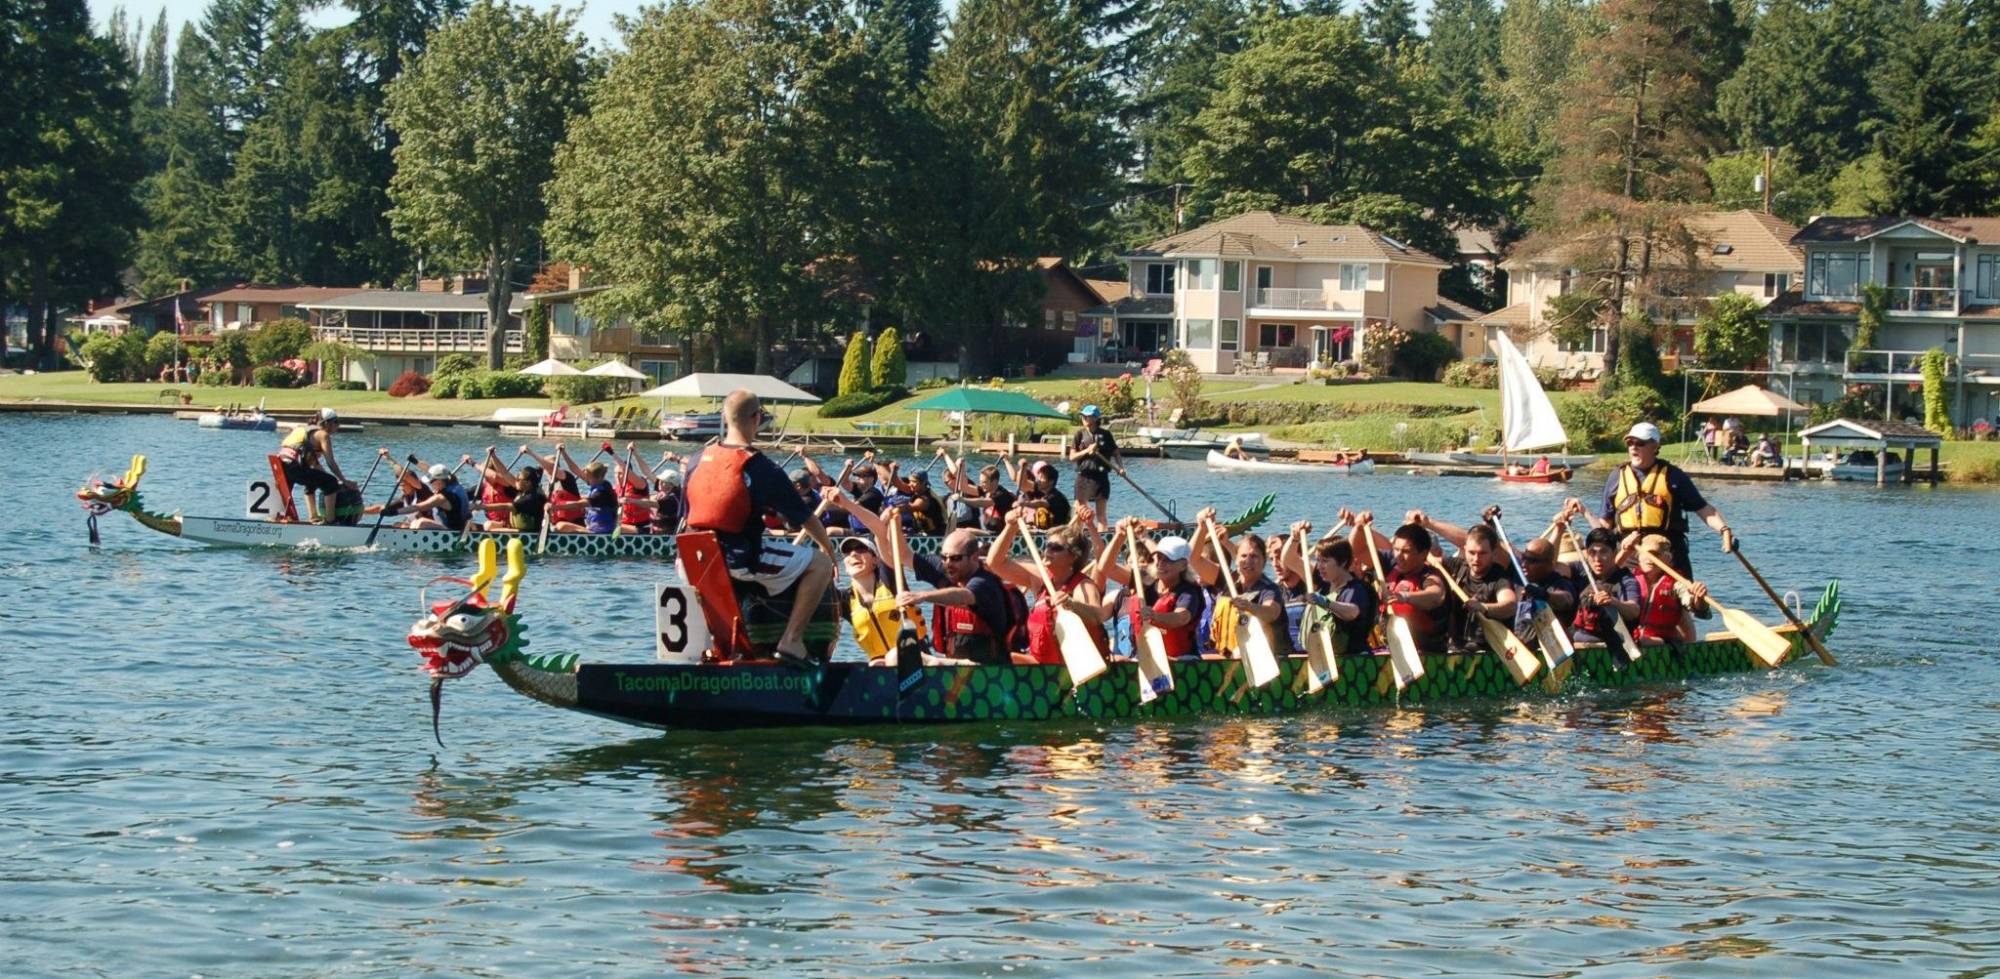 Dragon boat racing at Kent Cornucopia Days summer festival in Kent, Washington